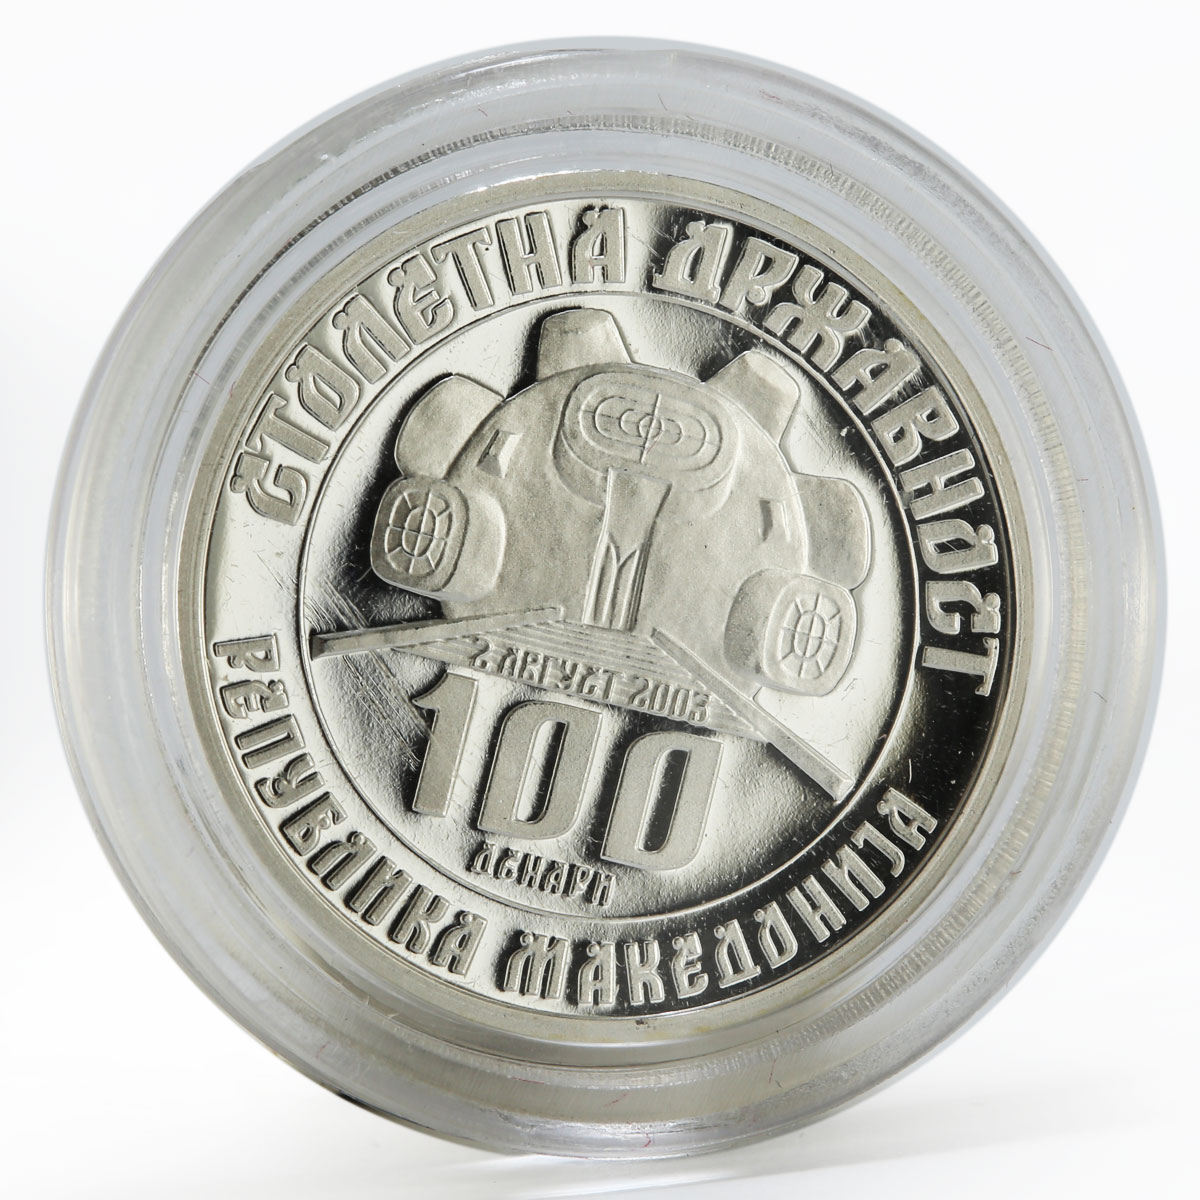 Macedonia 100 denari Pitu Guli revolutionary proof silver coin 2003